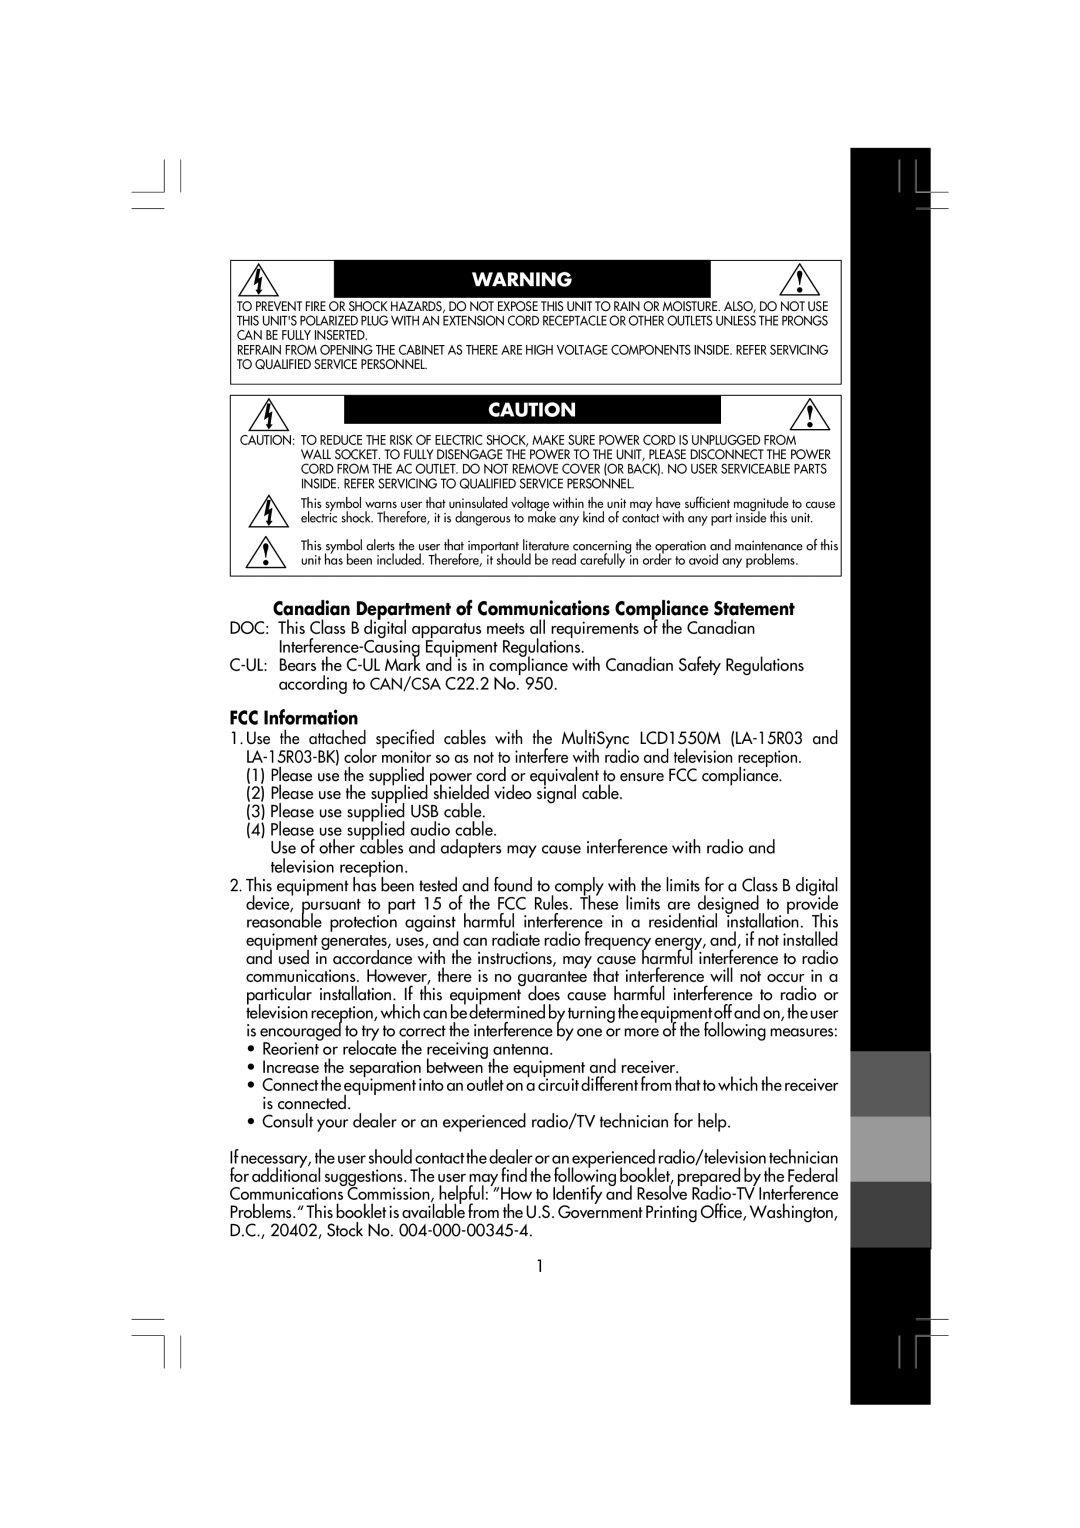 NEC LA-15R03-BK, LCD1550M manual Canadian Department of Communications Compliance Statement, FCC Information 